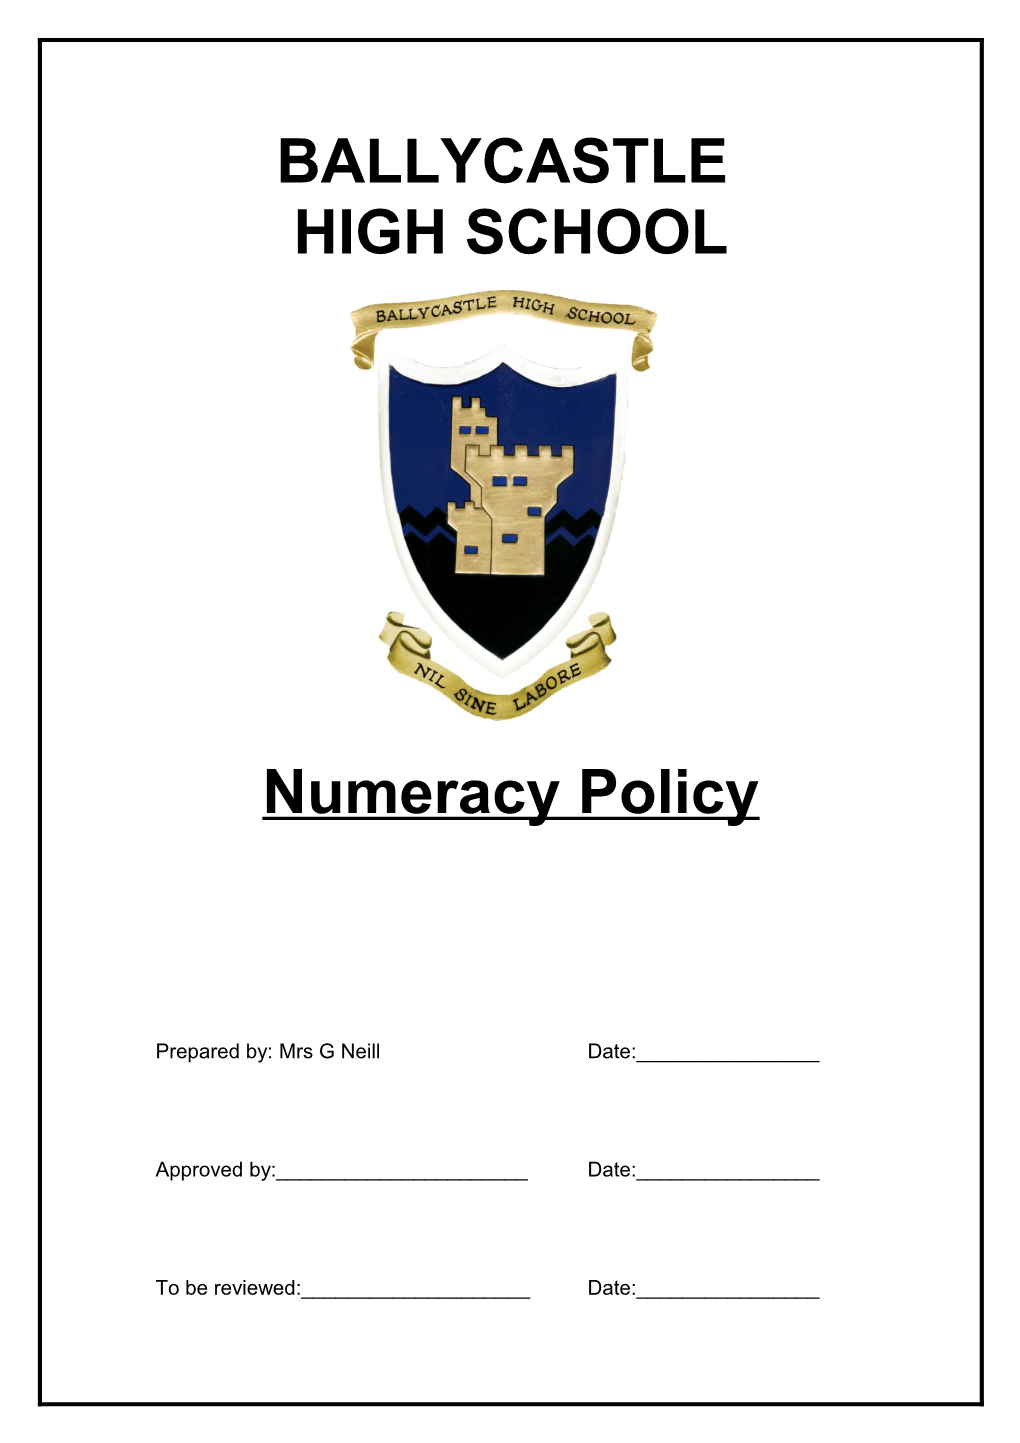 Numeracy Policy